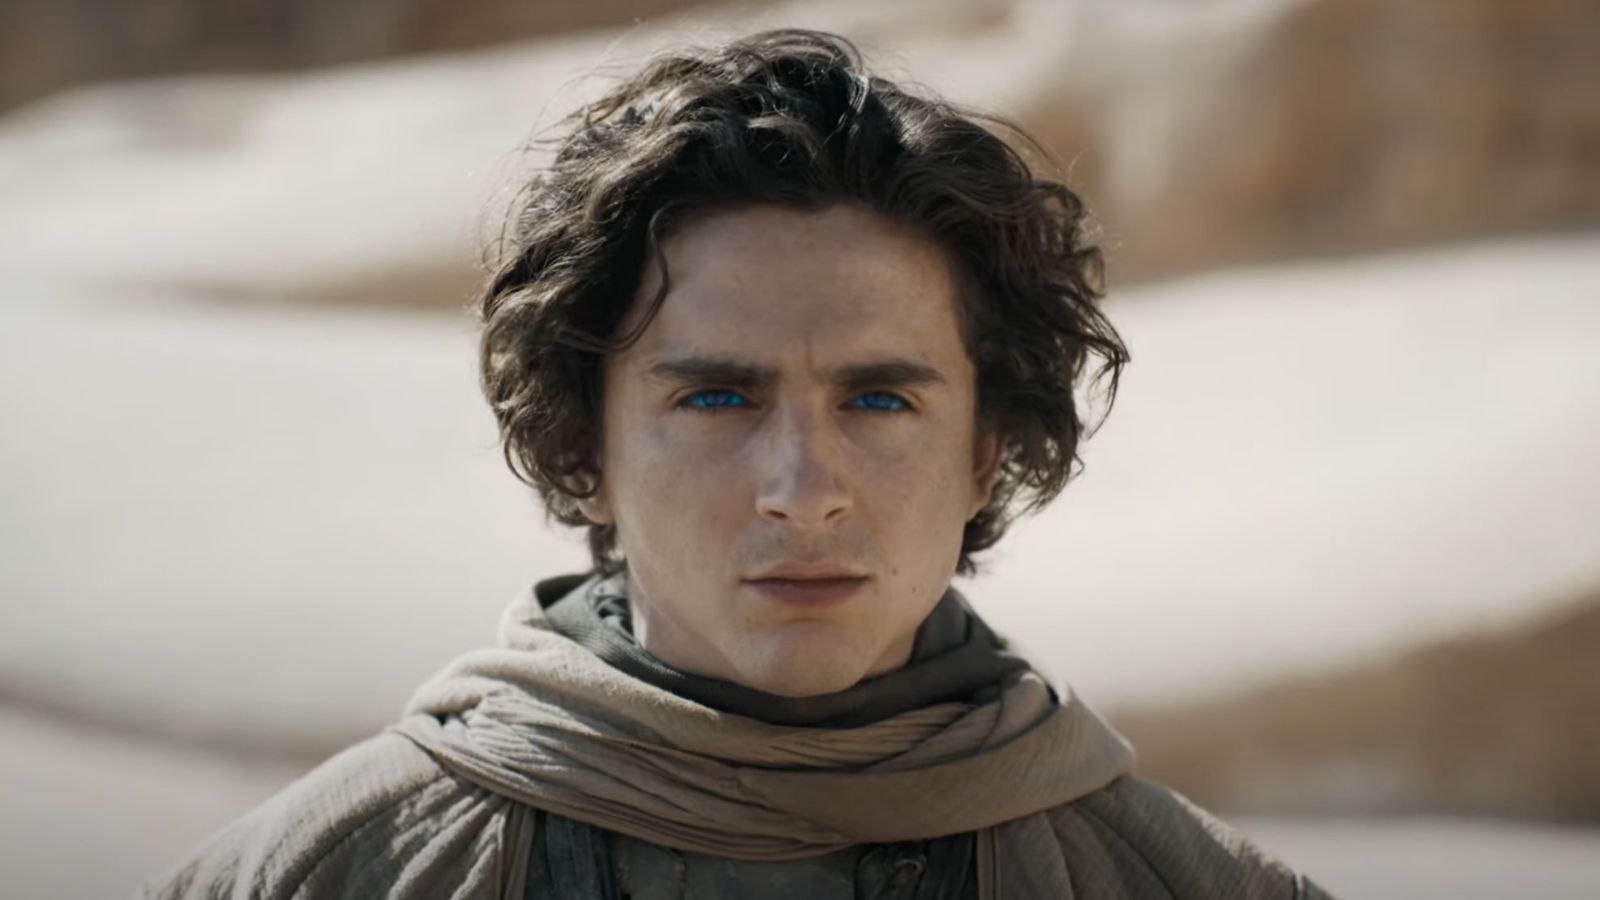 Warner Bros delays 'Dune,' 'Lord of the Rings' films due to strike